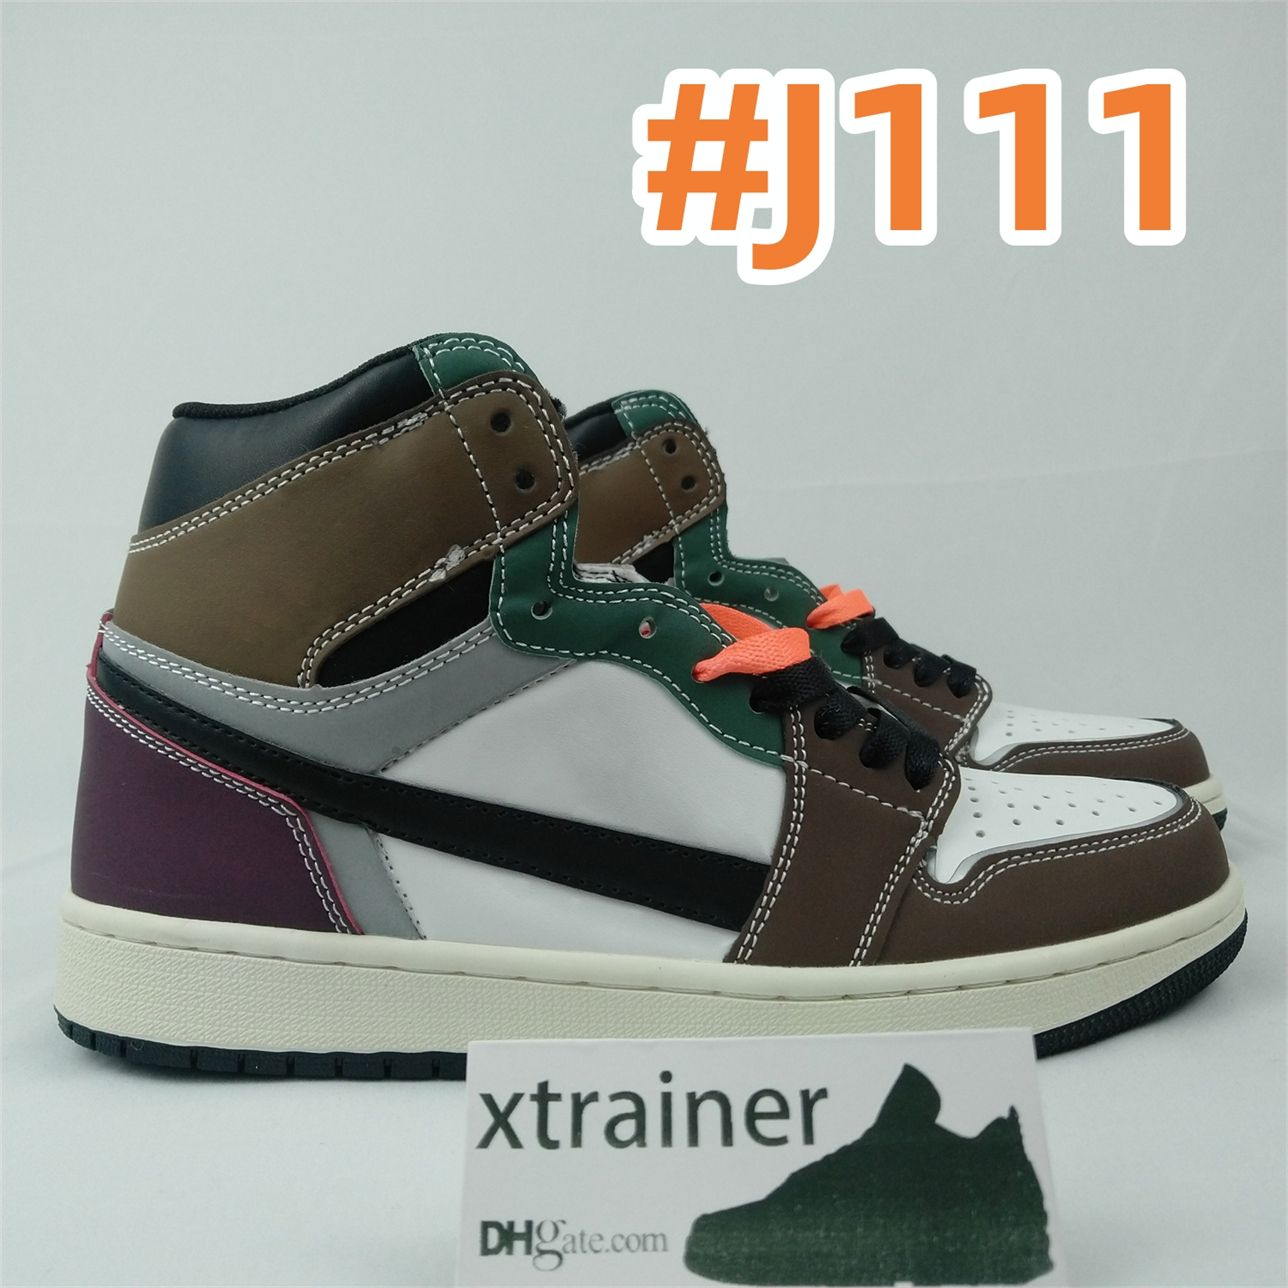 #J111